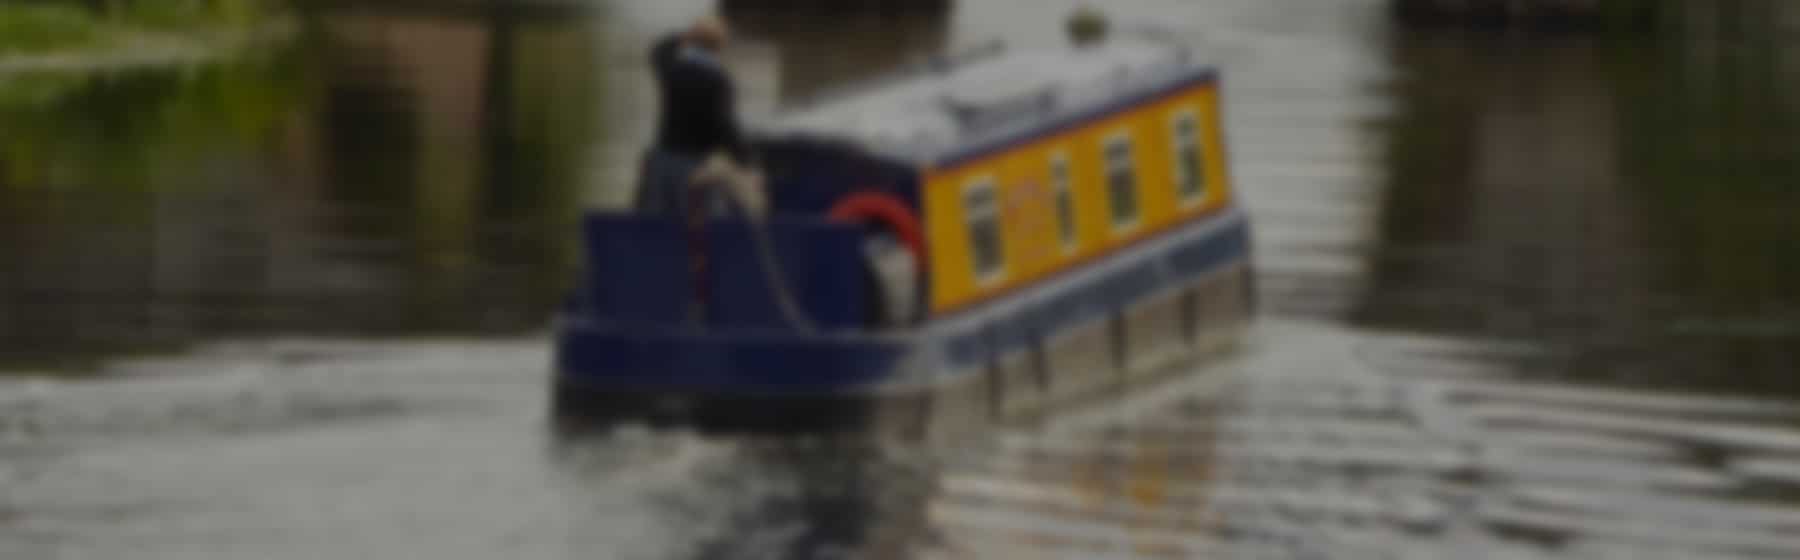 Man cruising on a blue narrowboat